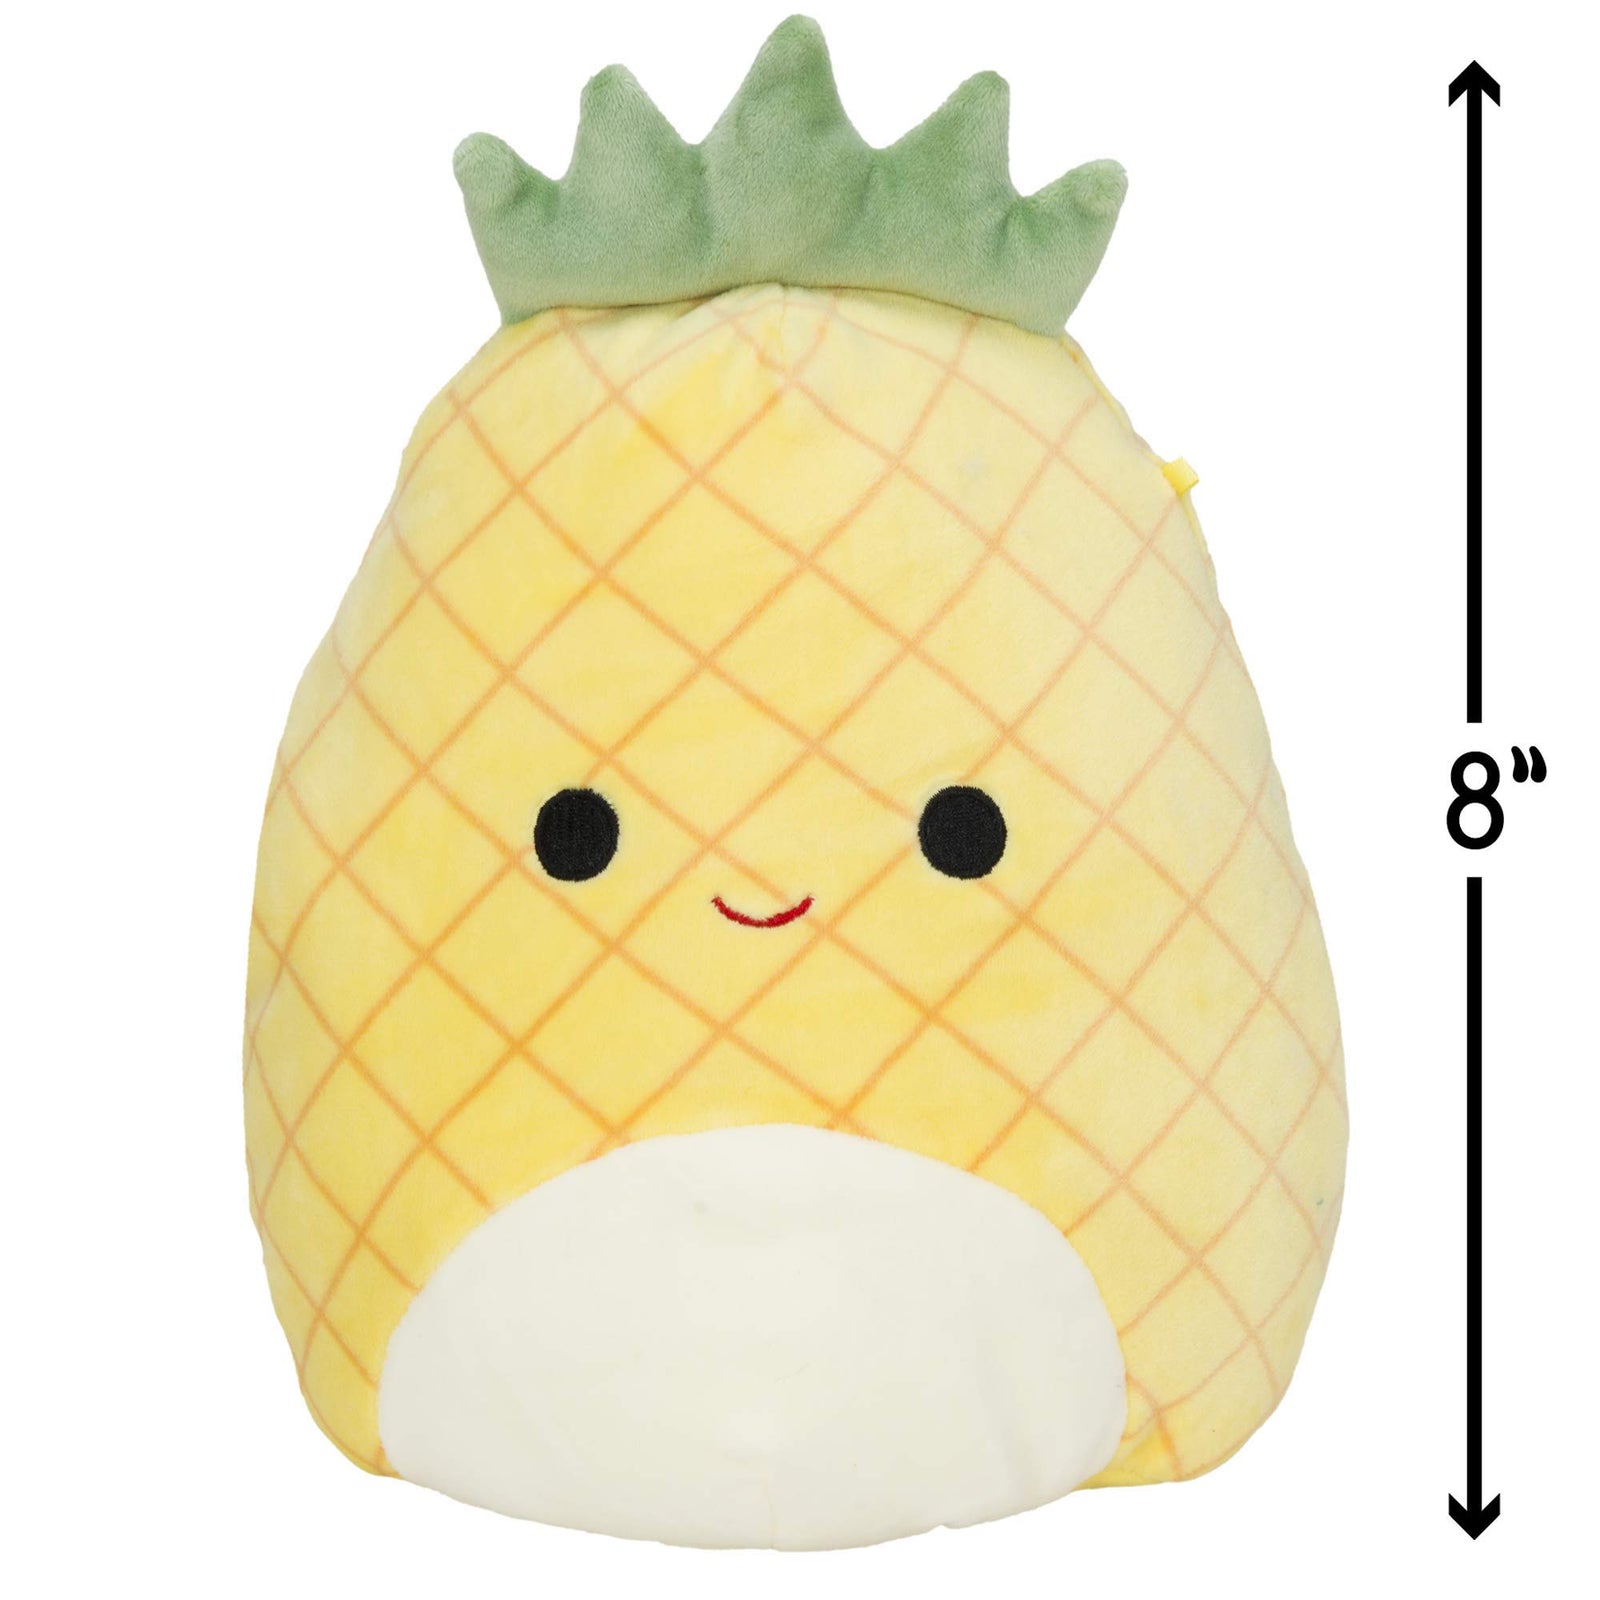 Squishmallows Official Kellytoy Plush 12" Maui The Pineapple - Ultrasoft Stuffed Animal Plush Toy